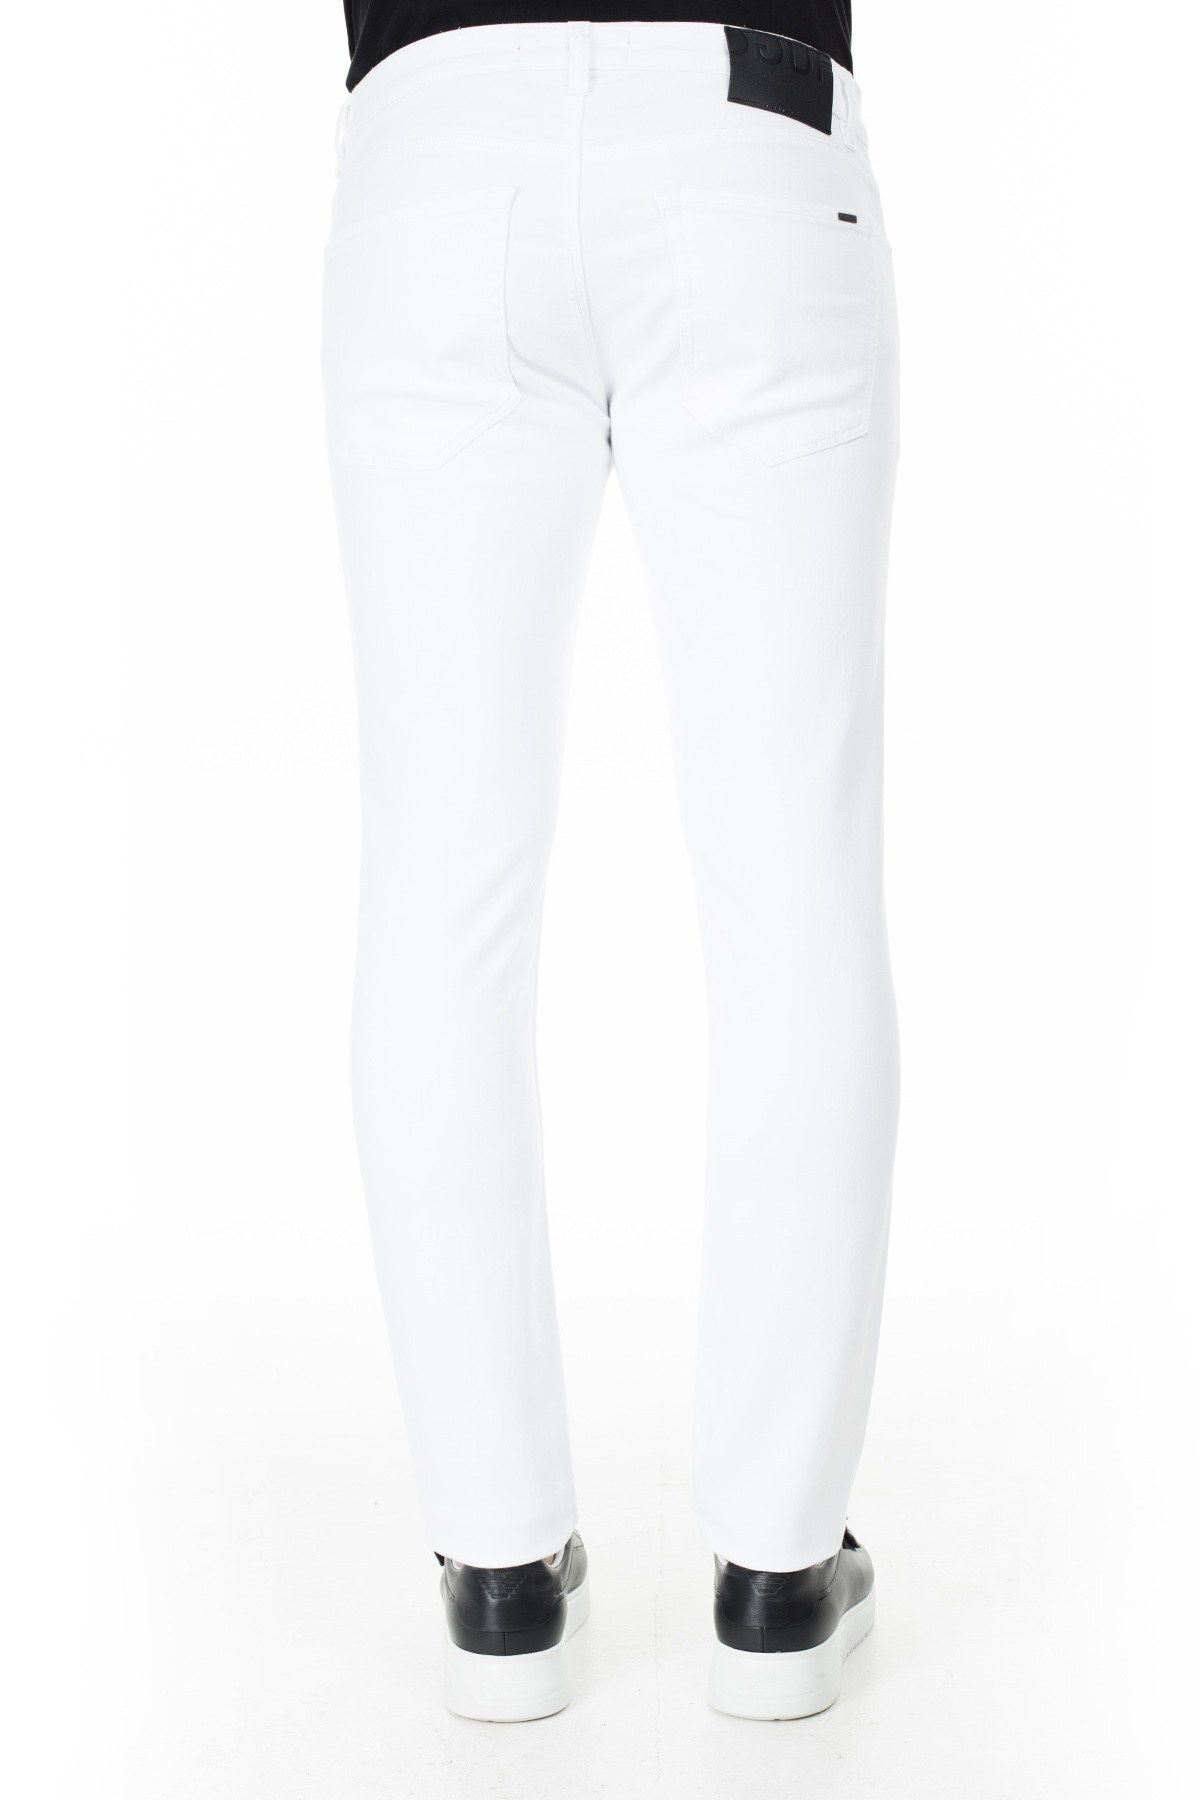 Hugo Boss Slim Fit Jeans Erkek Kot Pantolon 50426705 100 BEYAZ